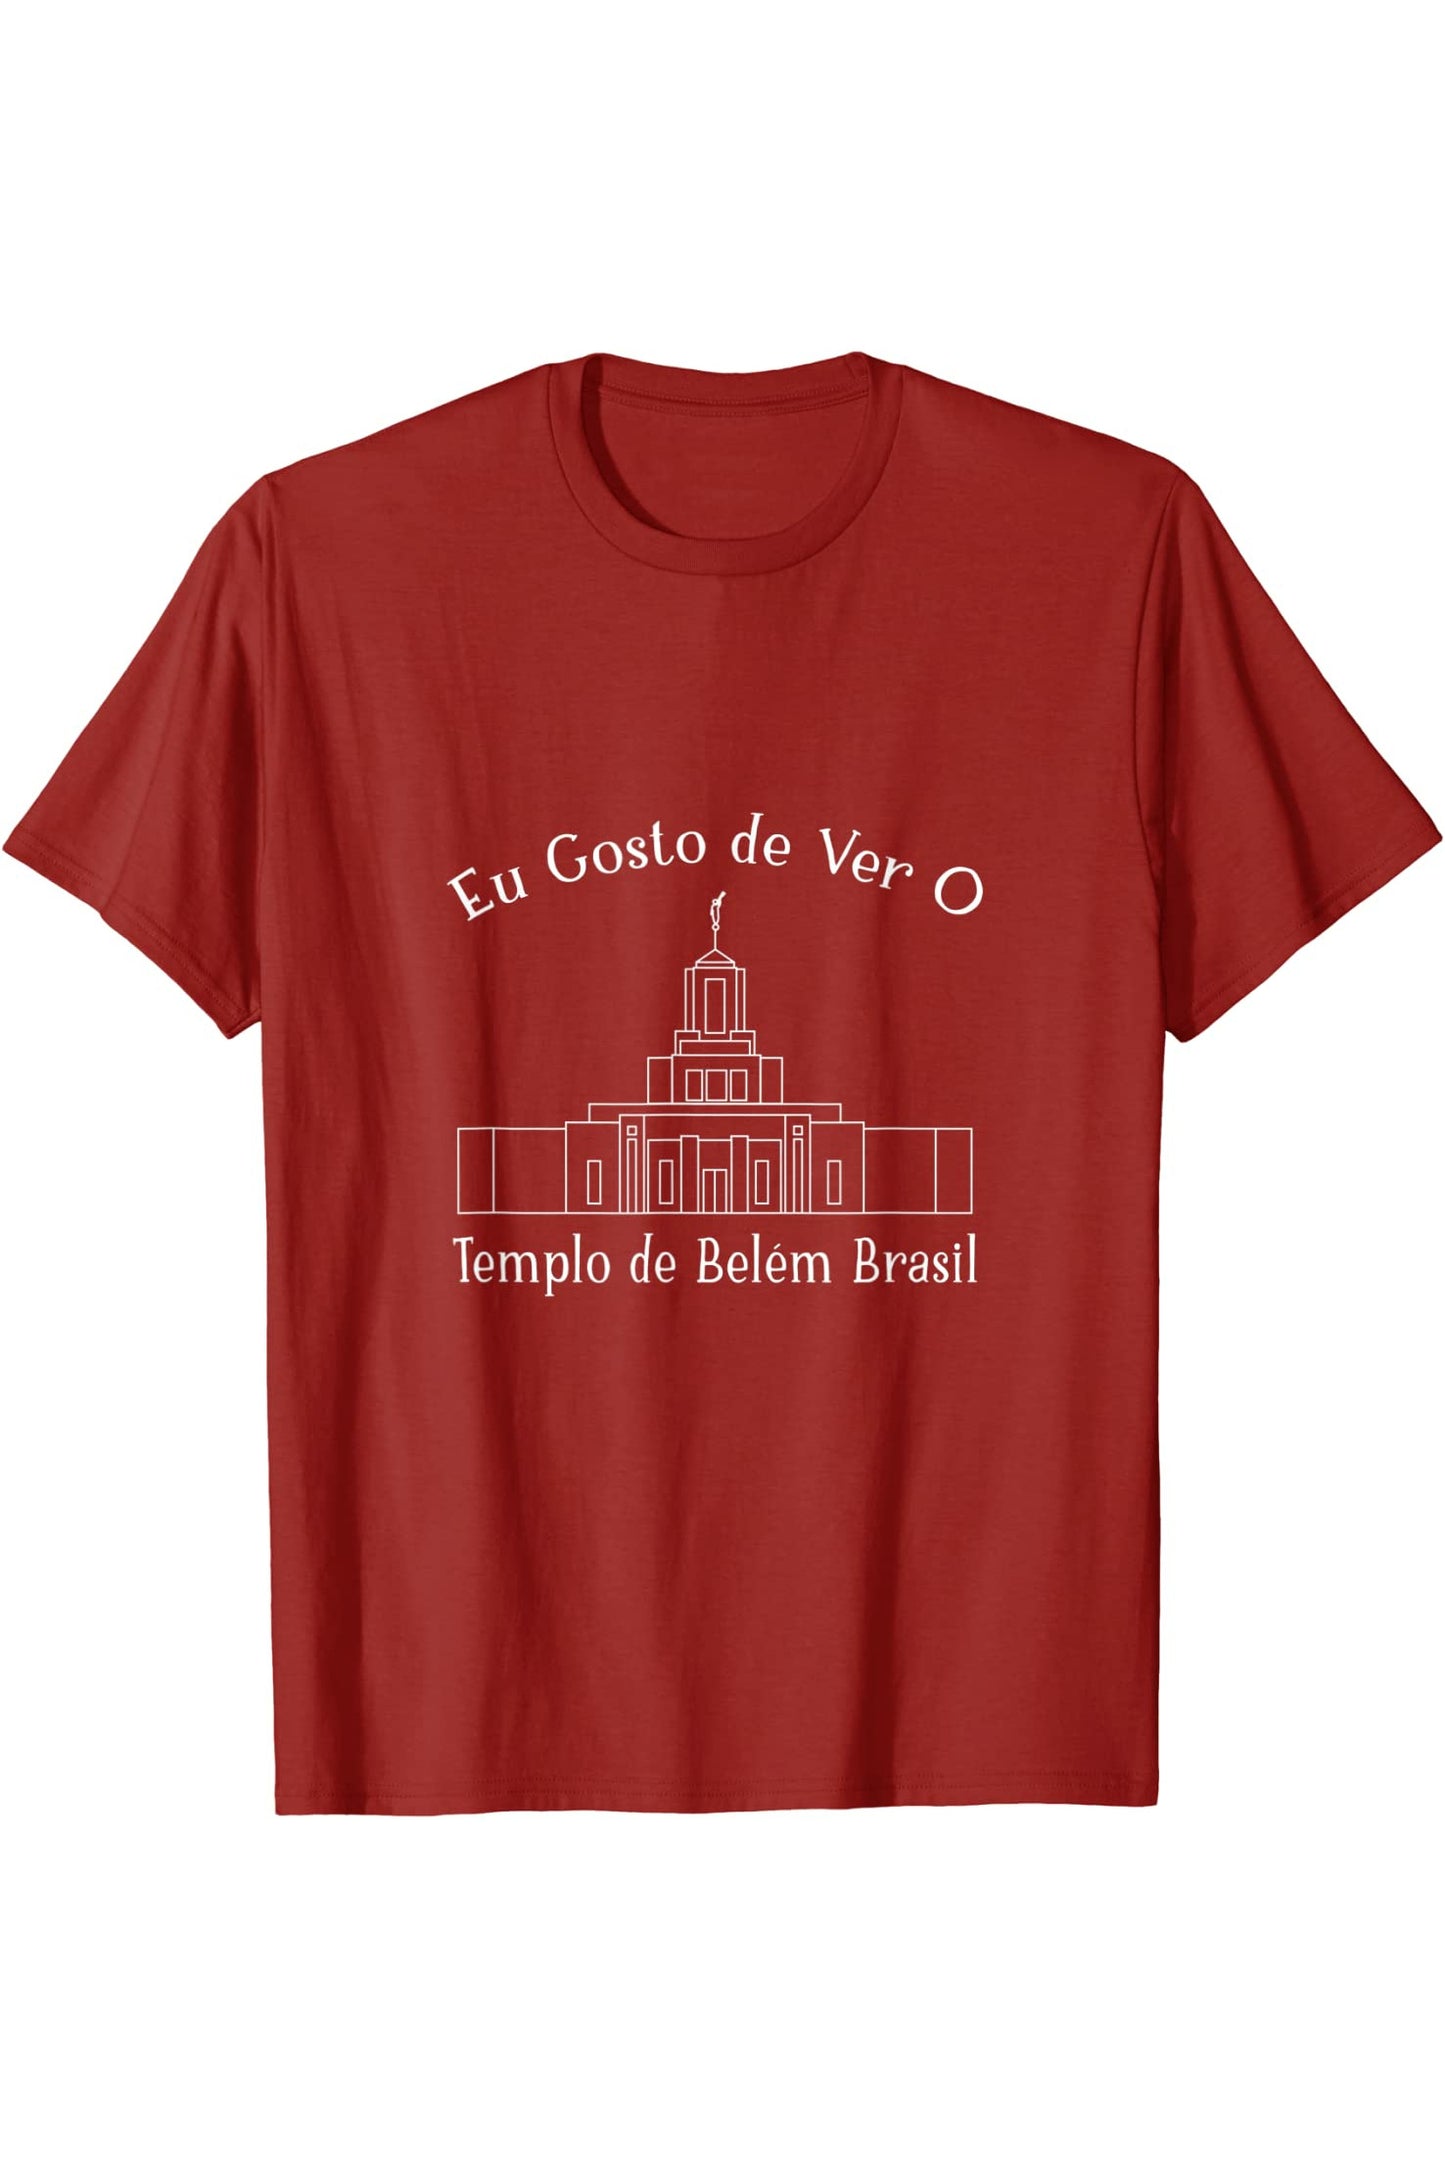 Belem Brazil Temple T-Shirt - Happy Style (Portuguese) US